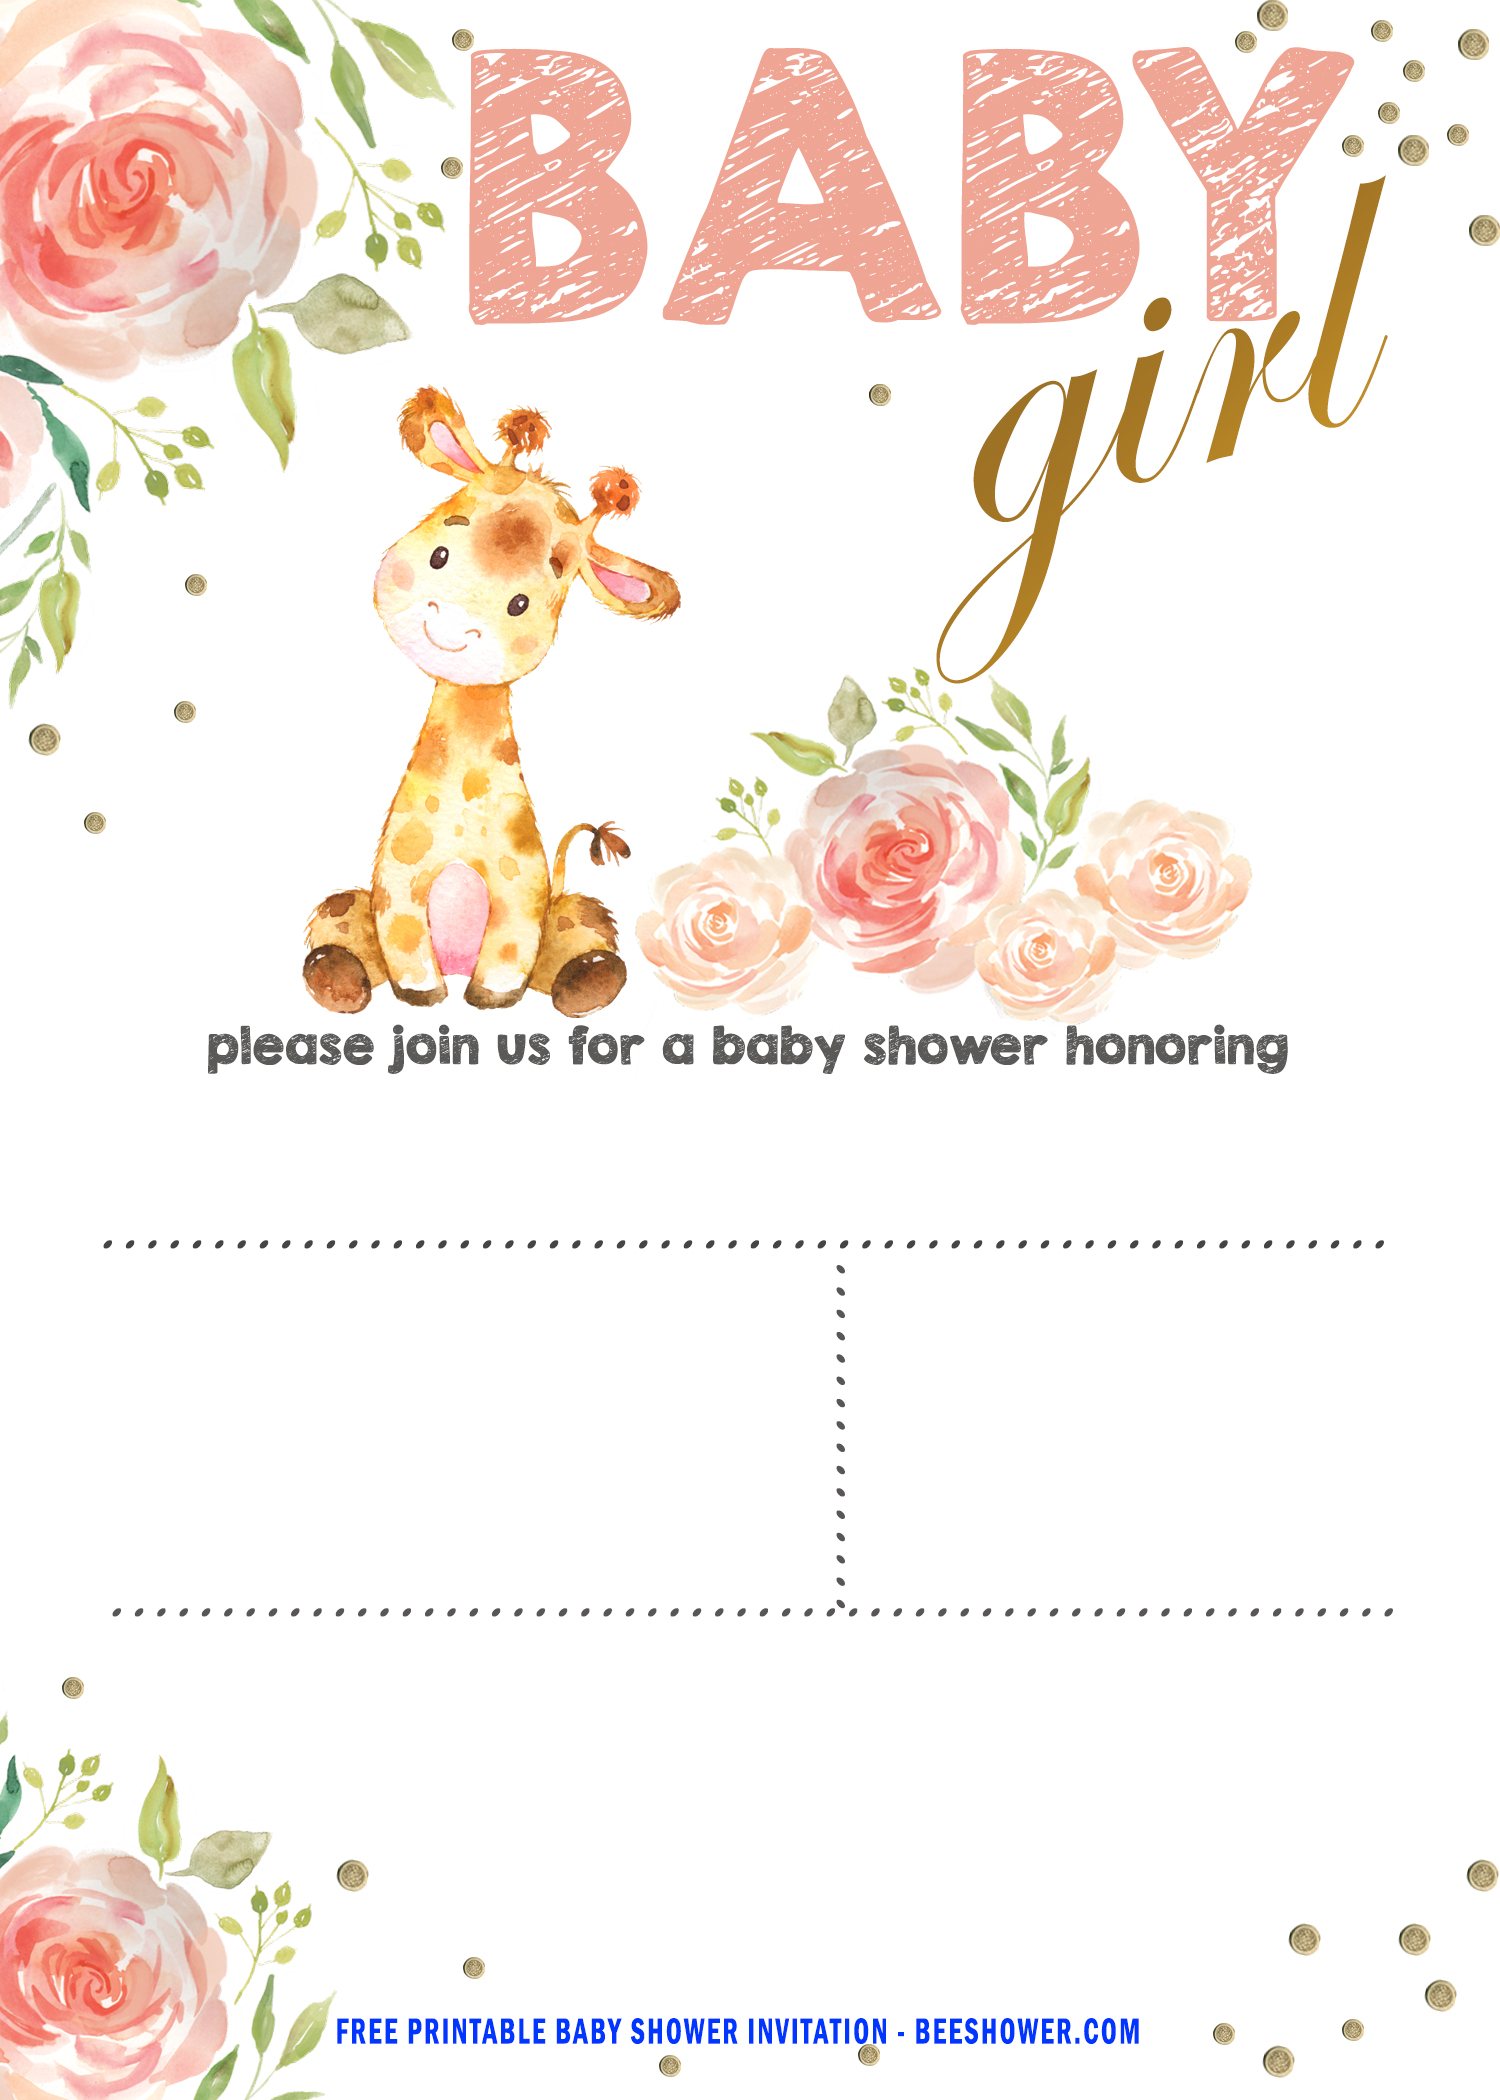 Free Baby Shower Invitation Template Microsoft Word from www.drevio.com